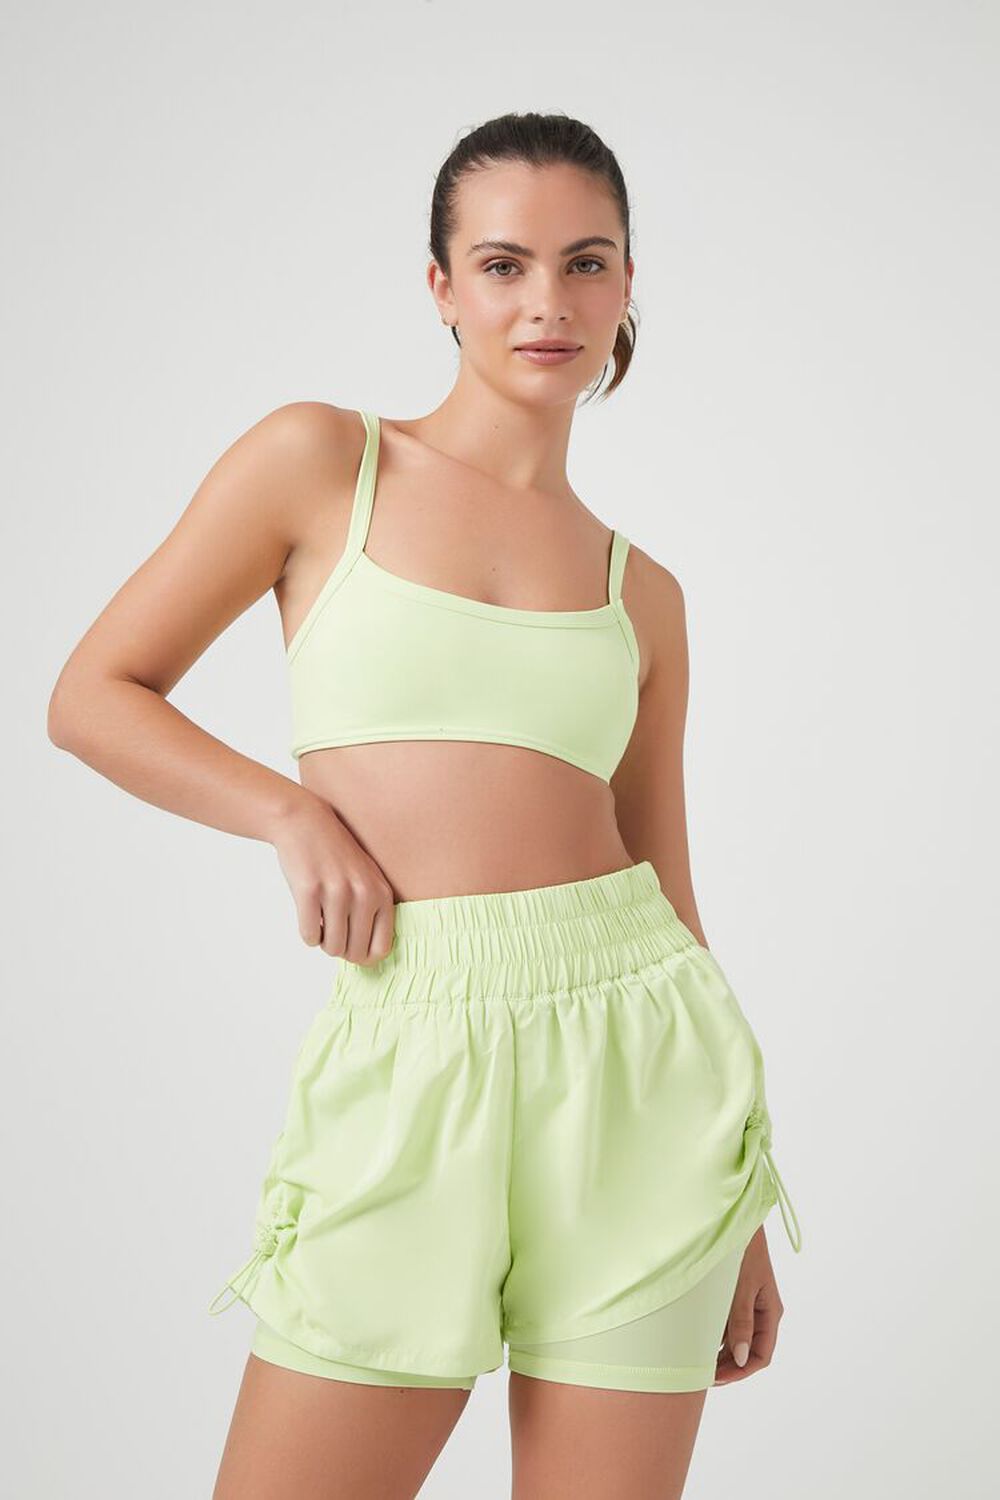 green ruffle top matching sports bra and biker shorts